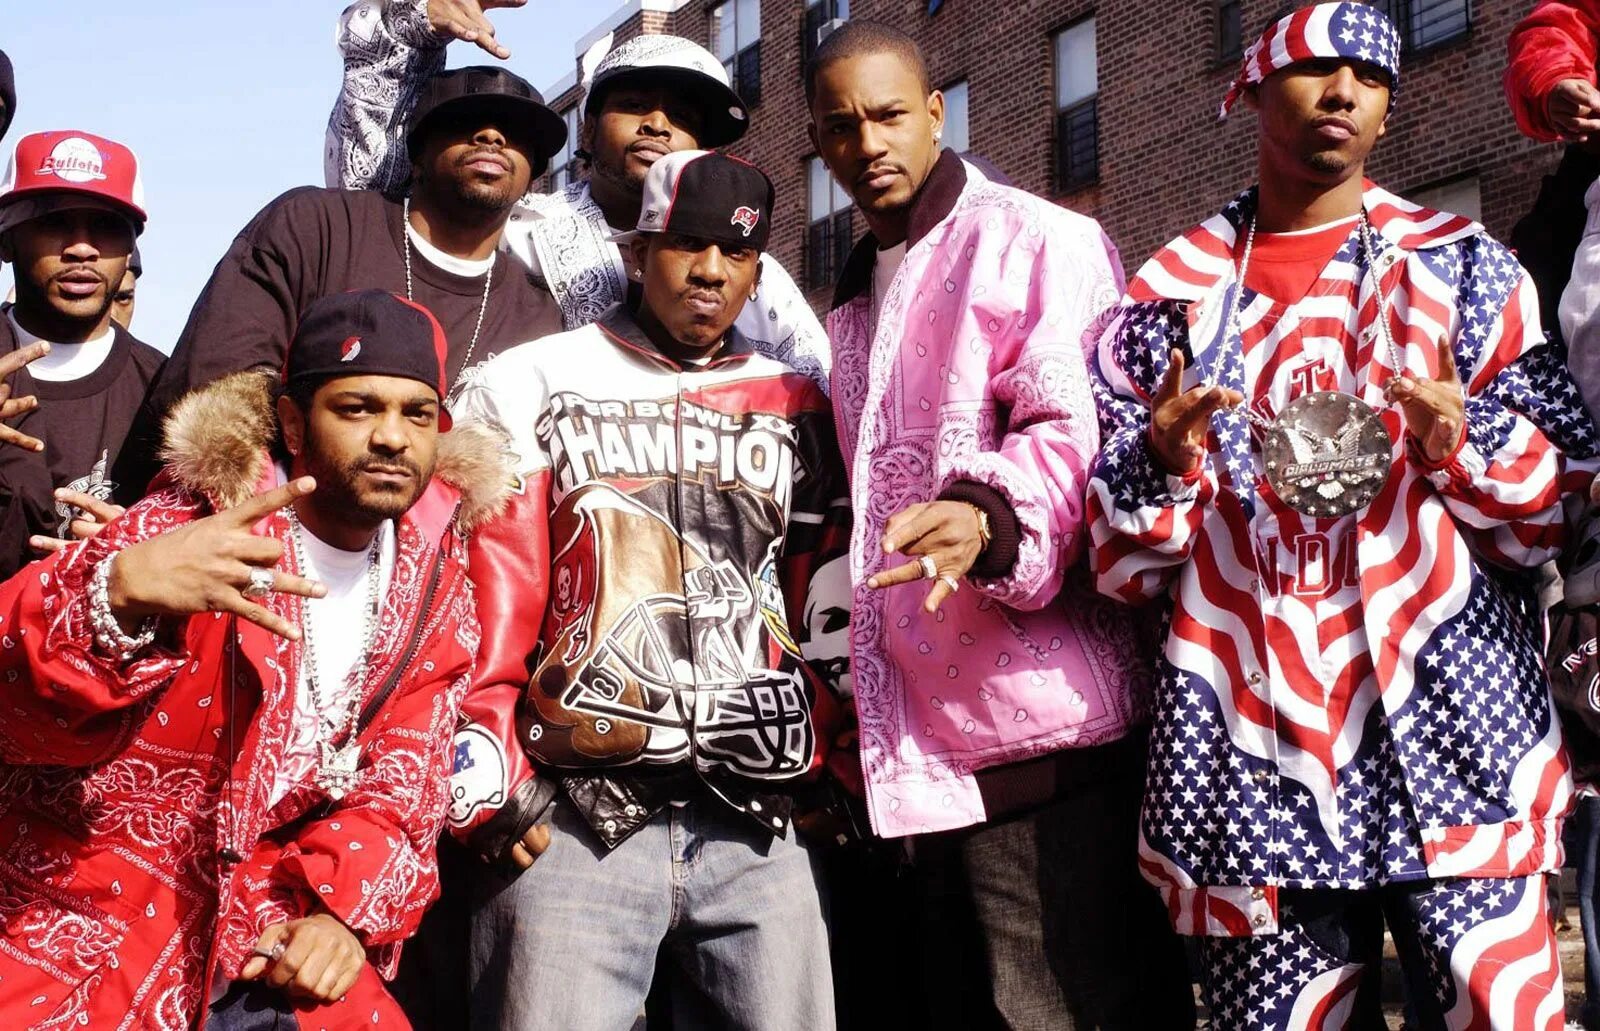 РЭПЕРЫ субкультура 2000. Хип хоп стиль в Америке 90е. Хип хоп США 90е. Хип хоп культура одежда 2000 Америка.